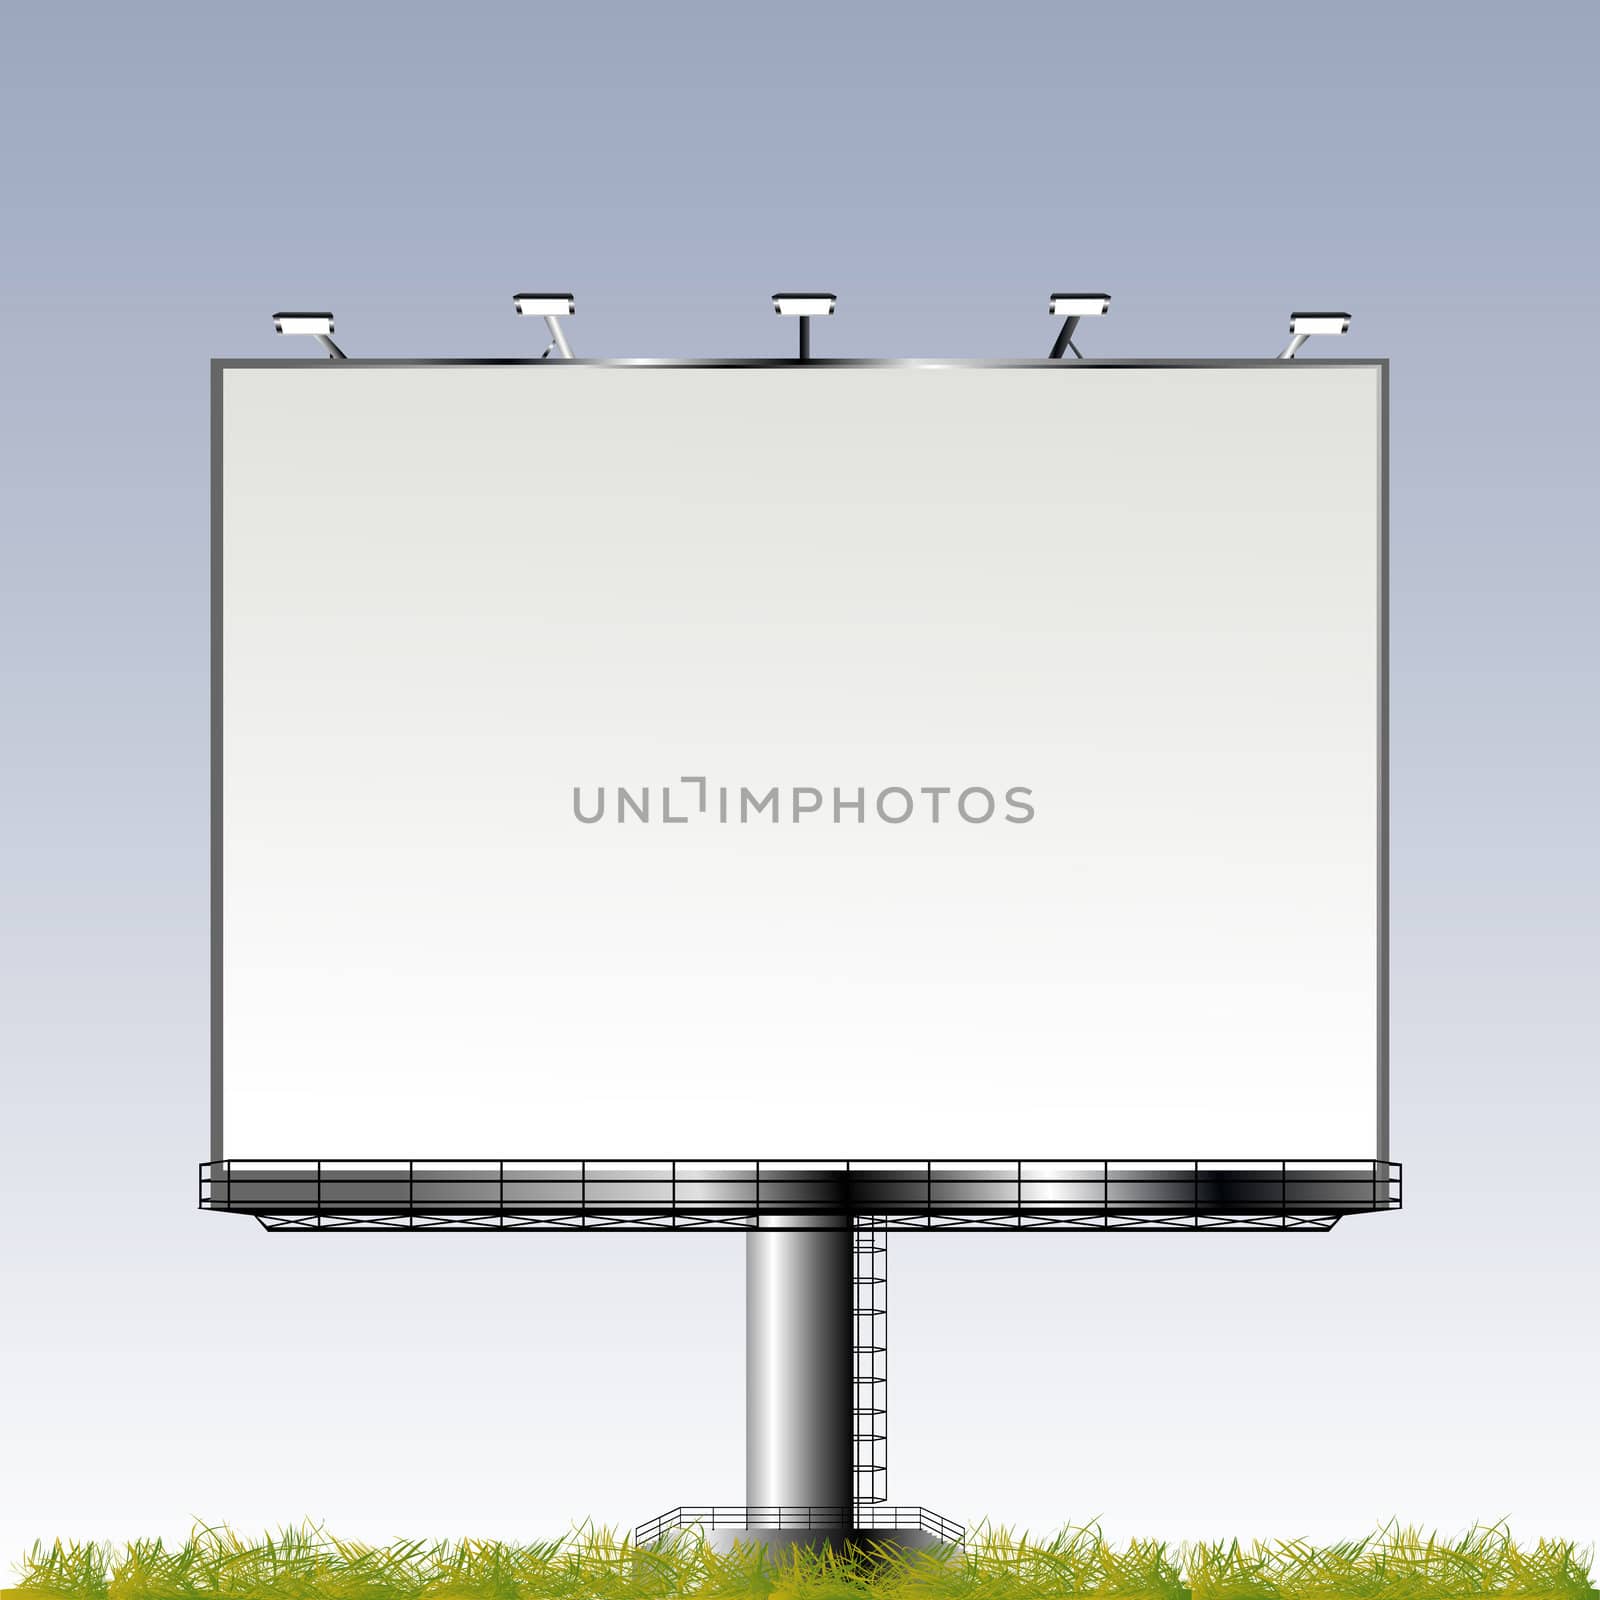 Grand outdoor billboard by Lirch